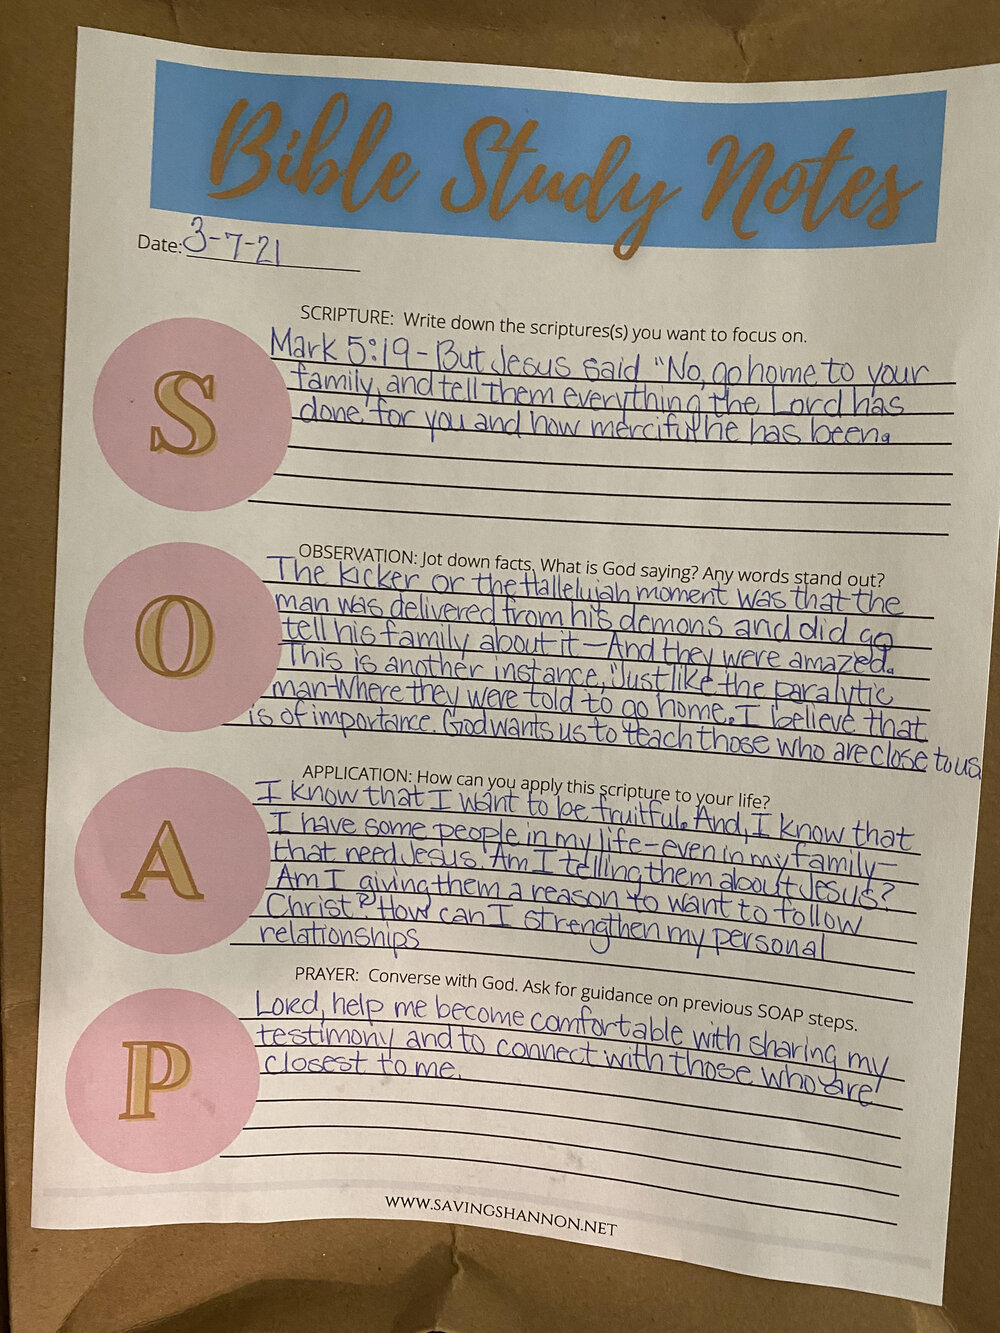 SOAP Bible Study Method — Saving Shannon